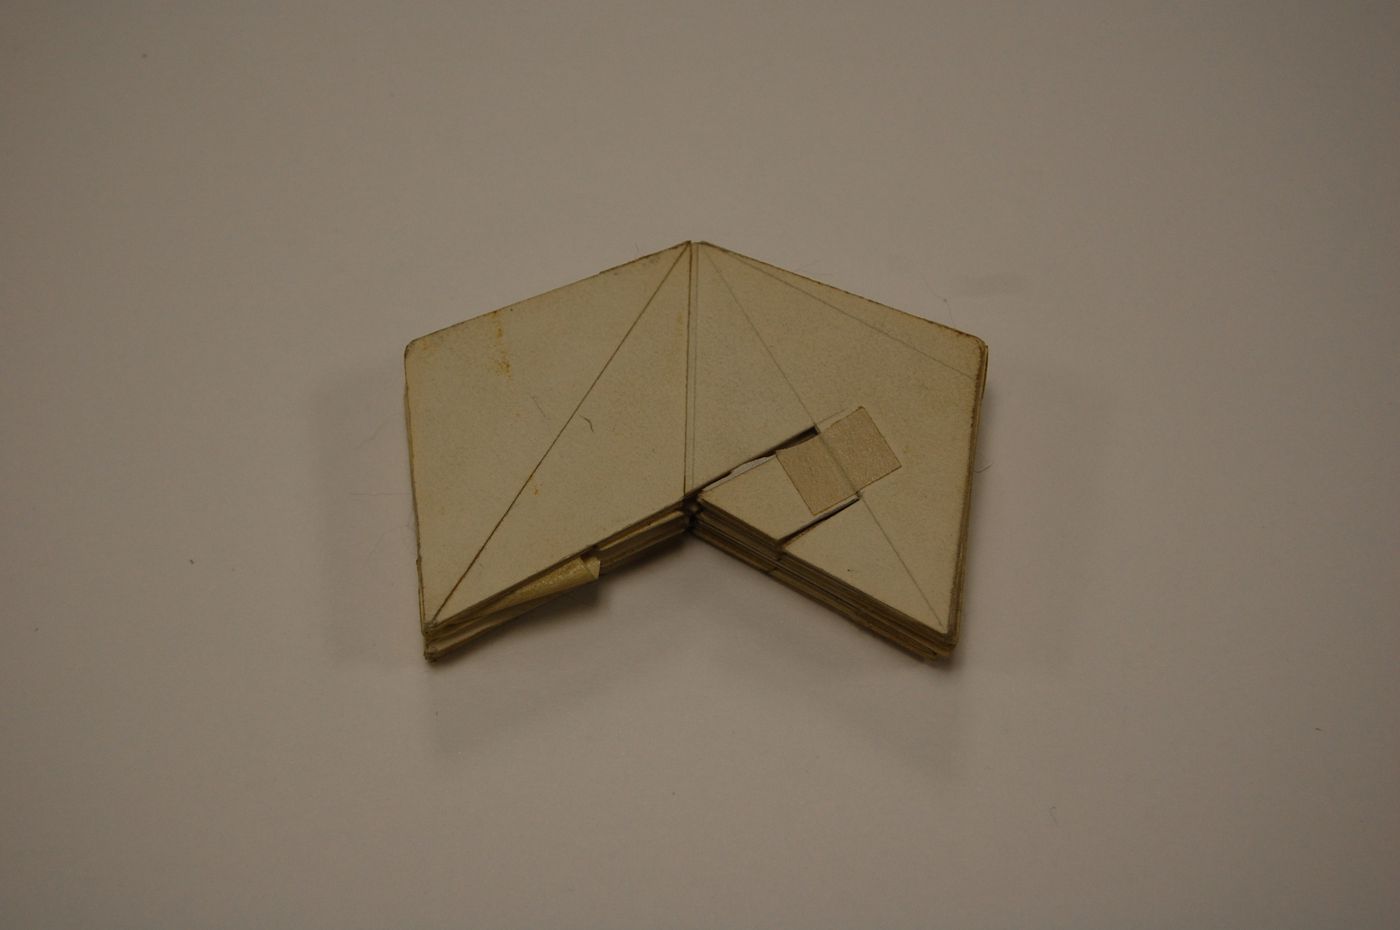 Origami study